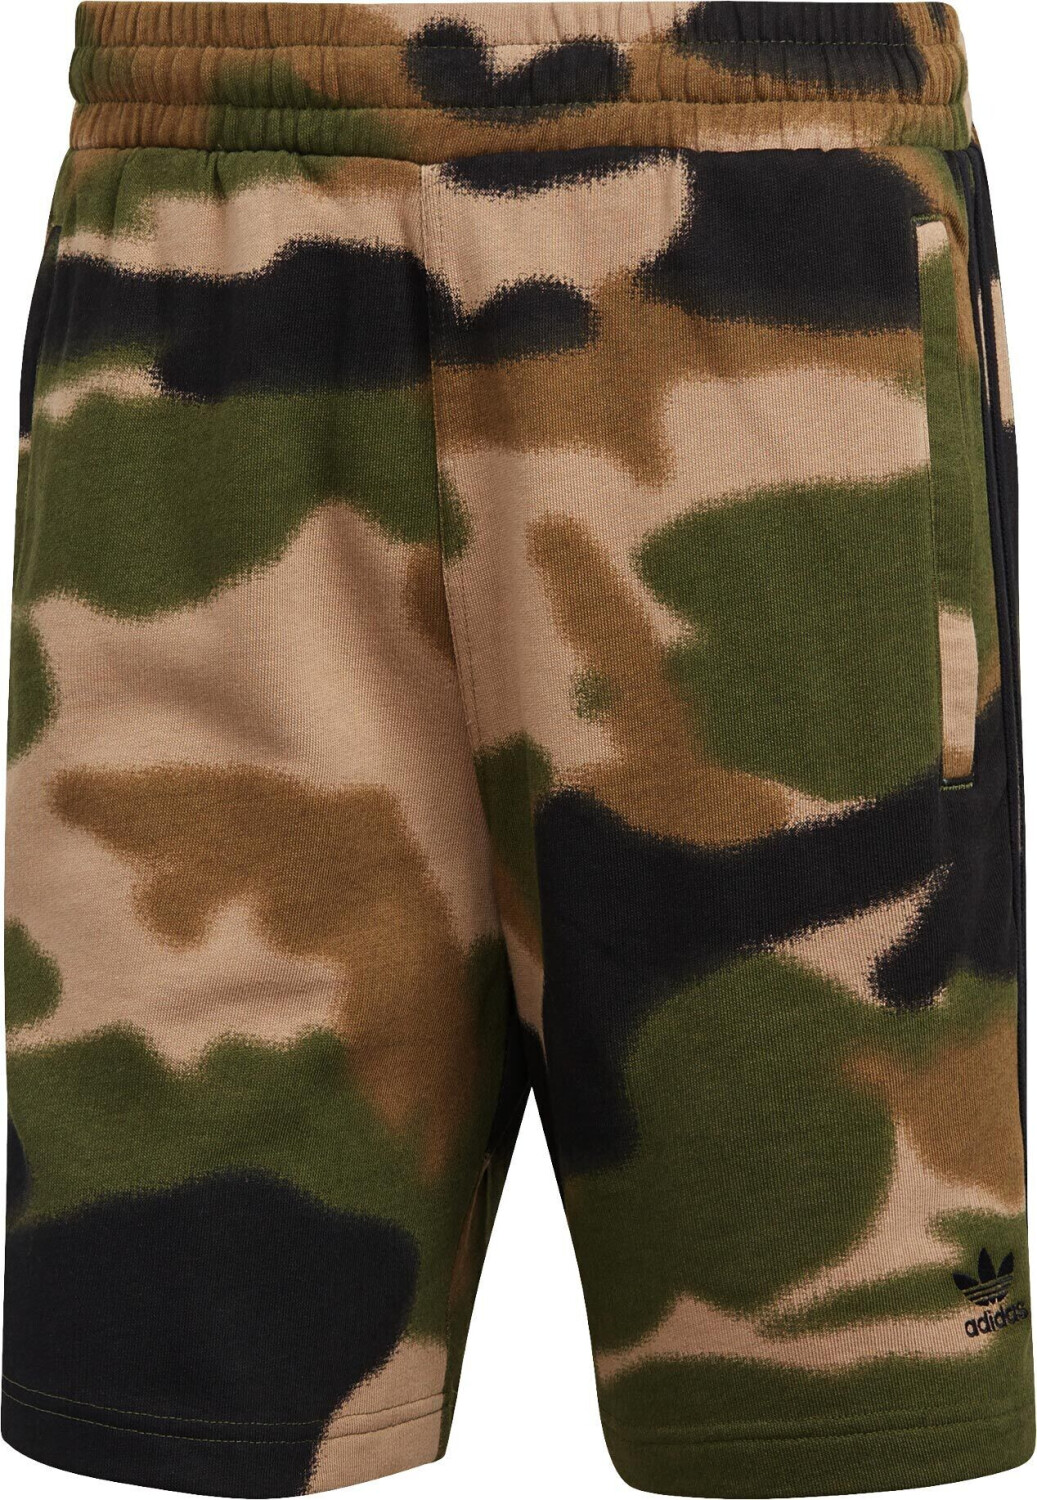 Camo | € ab 27,20 Adidas Shorts 3-Stripes wild bei pine/multicolor/black Preisvergleich